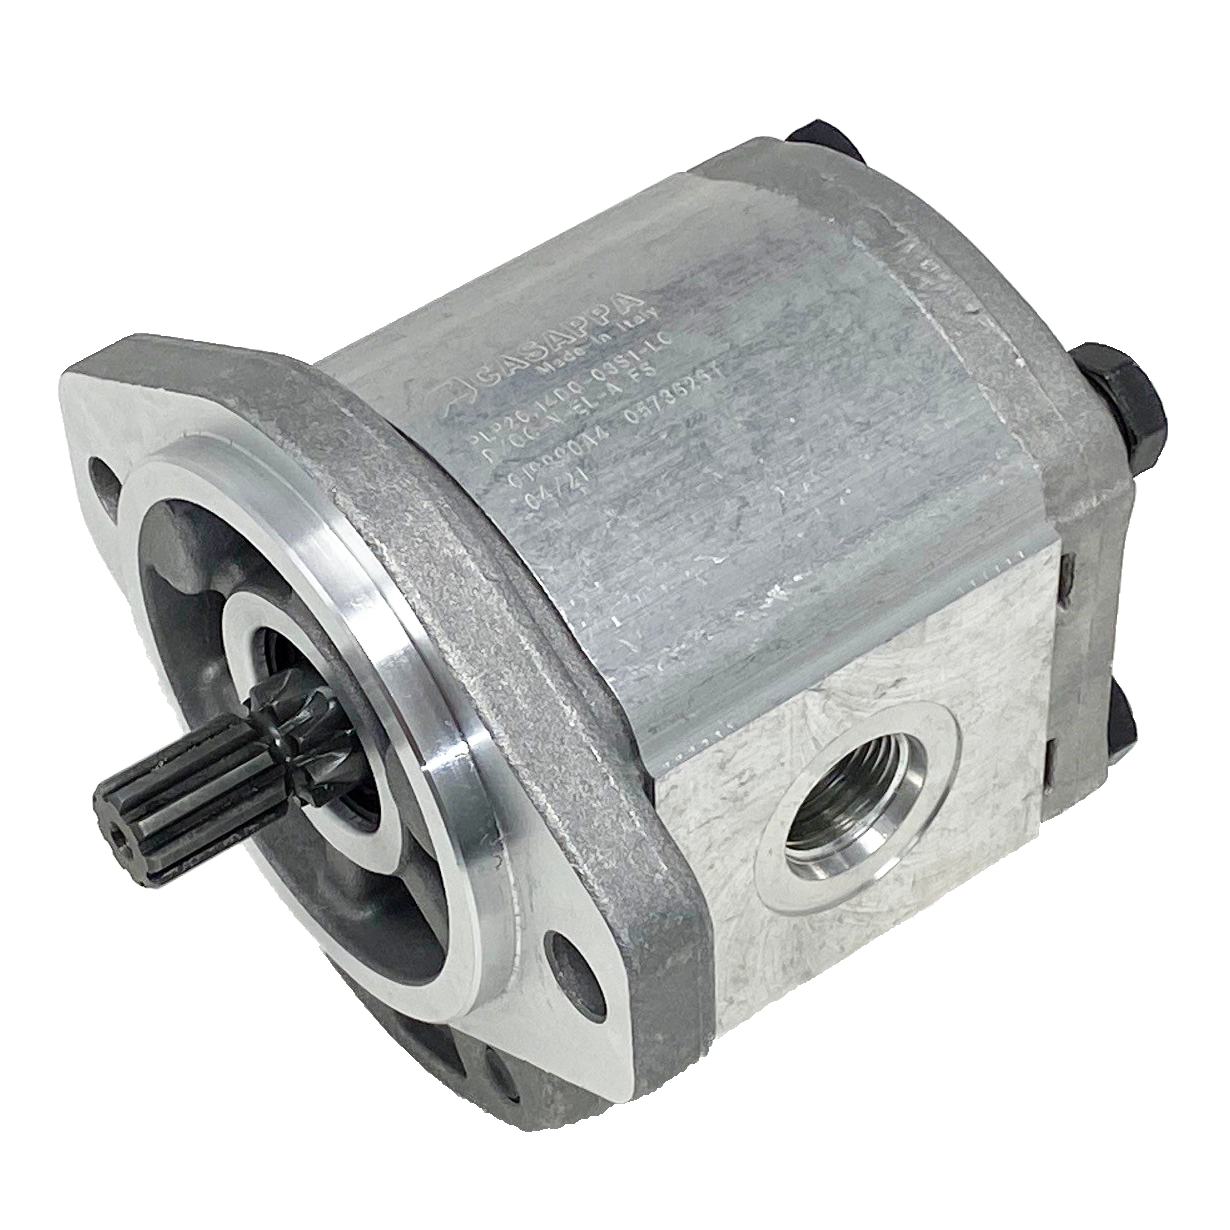 PLM20.16R0-03S1-LOC/OD-N-EL : Casappa Polaris Gear Motor, 16.85cc, 3625psi Rated, 3000RPM, Reversible Rear External Drain, 9T 16/32dp Shaft, SAE A 2-Bolt Flange, 0.625 (5/8") #10 SAE Inlet, 0.75 (3/4") #12 SAE Outlet, Aluminum Body & Flange